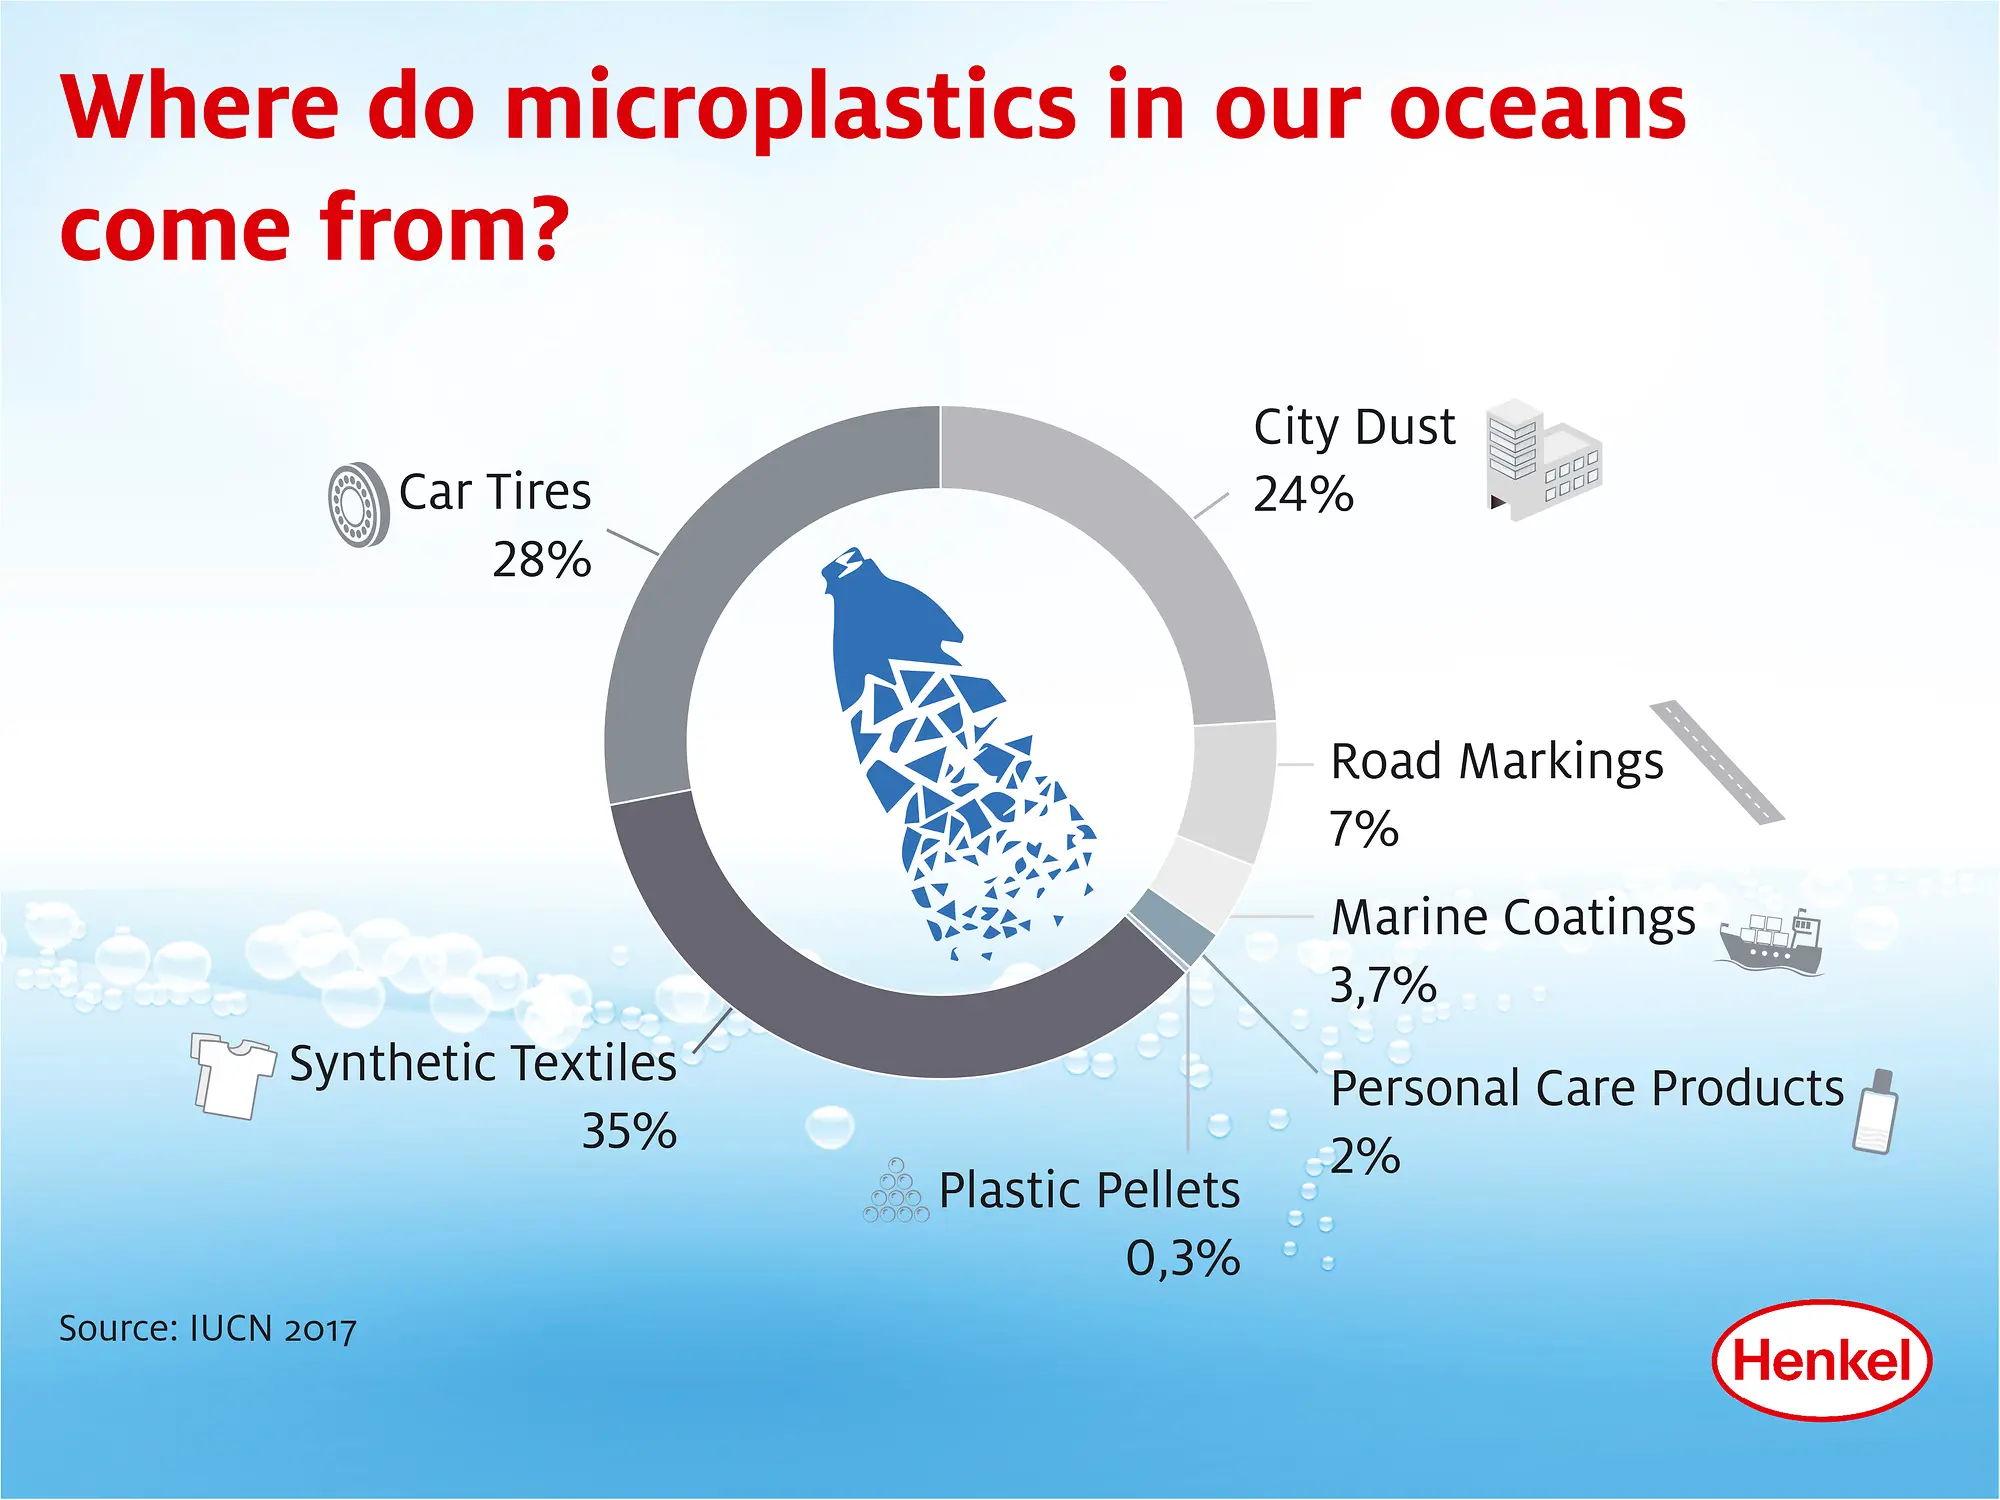 Microplastics in oceans